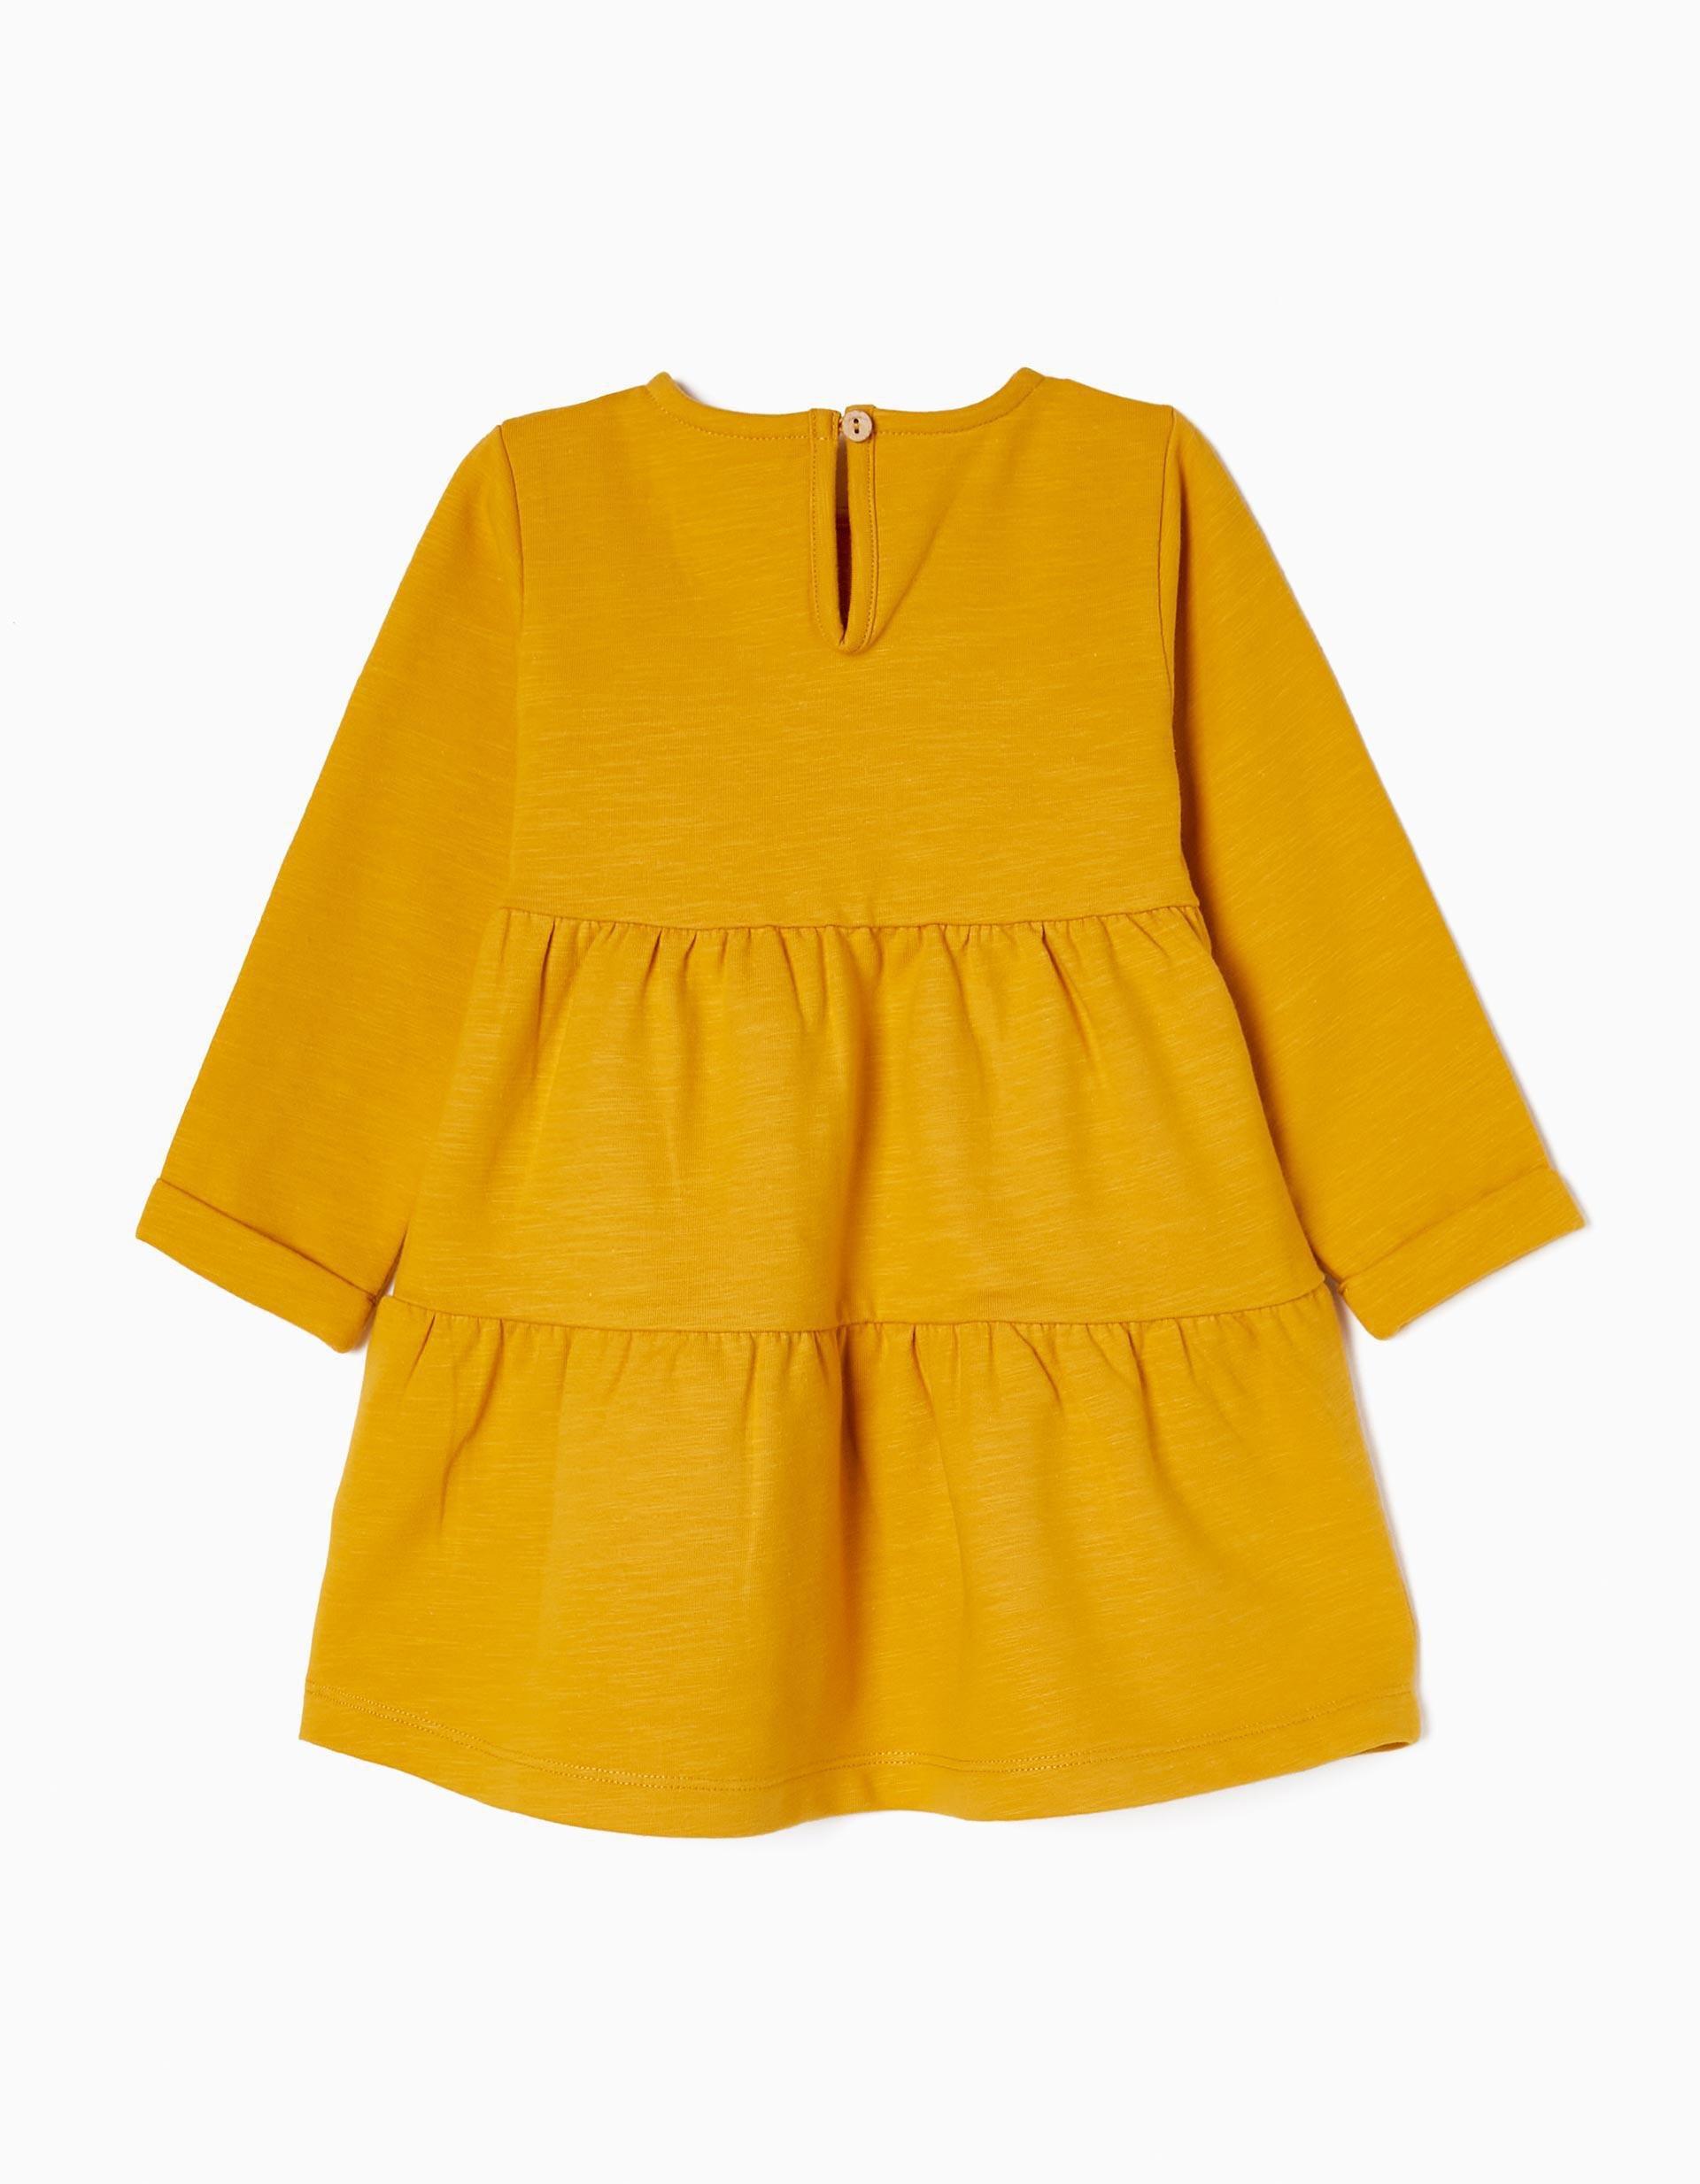 Zippy - Orange Long-Sleeve Cotton Dress, Baby Girls